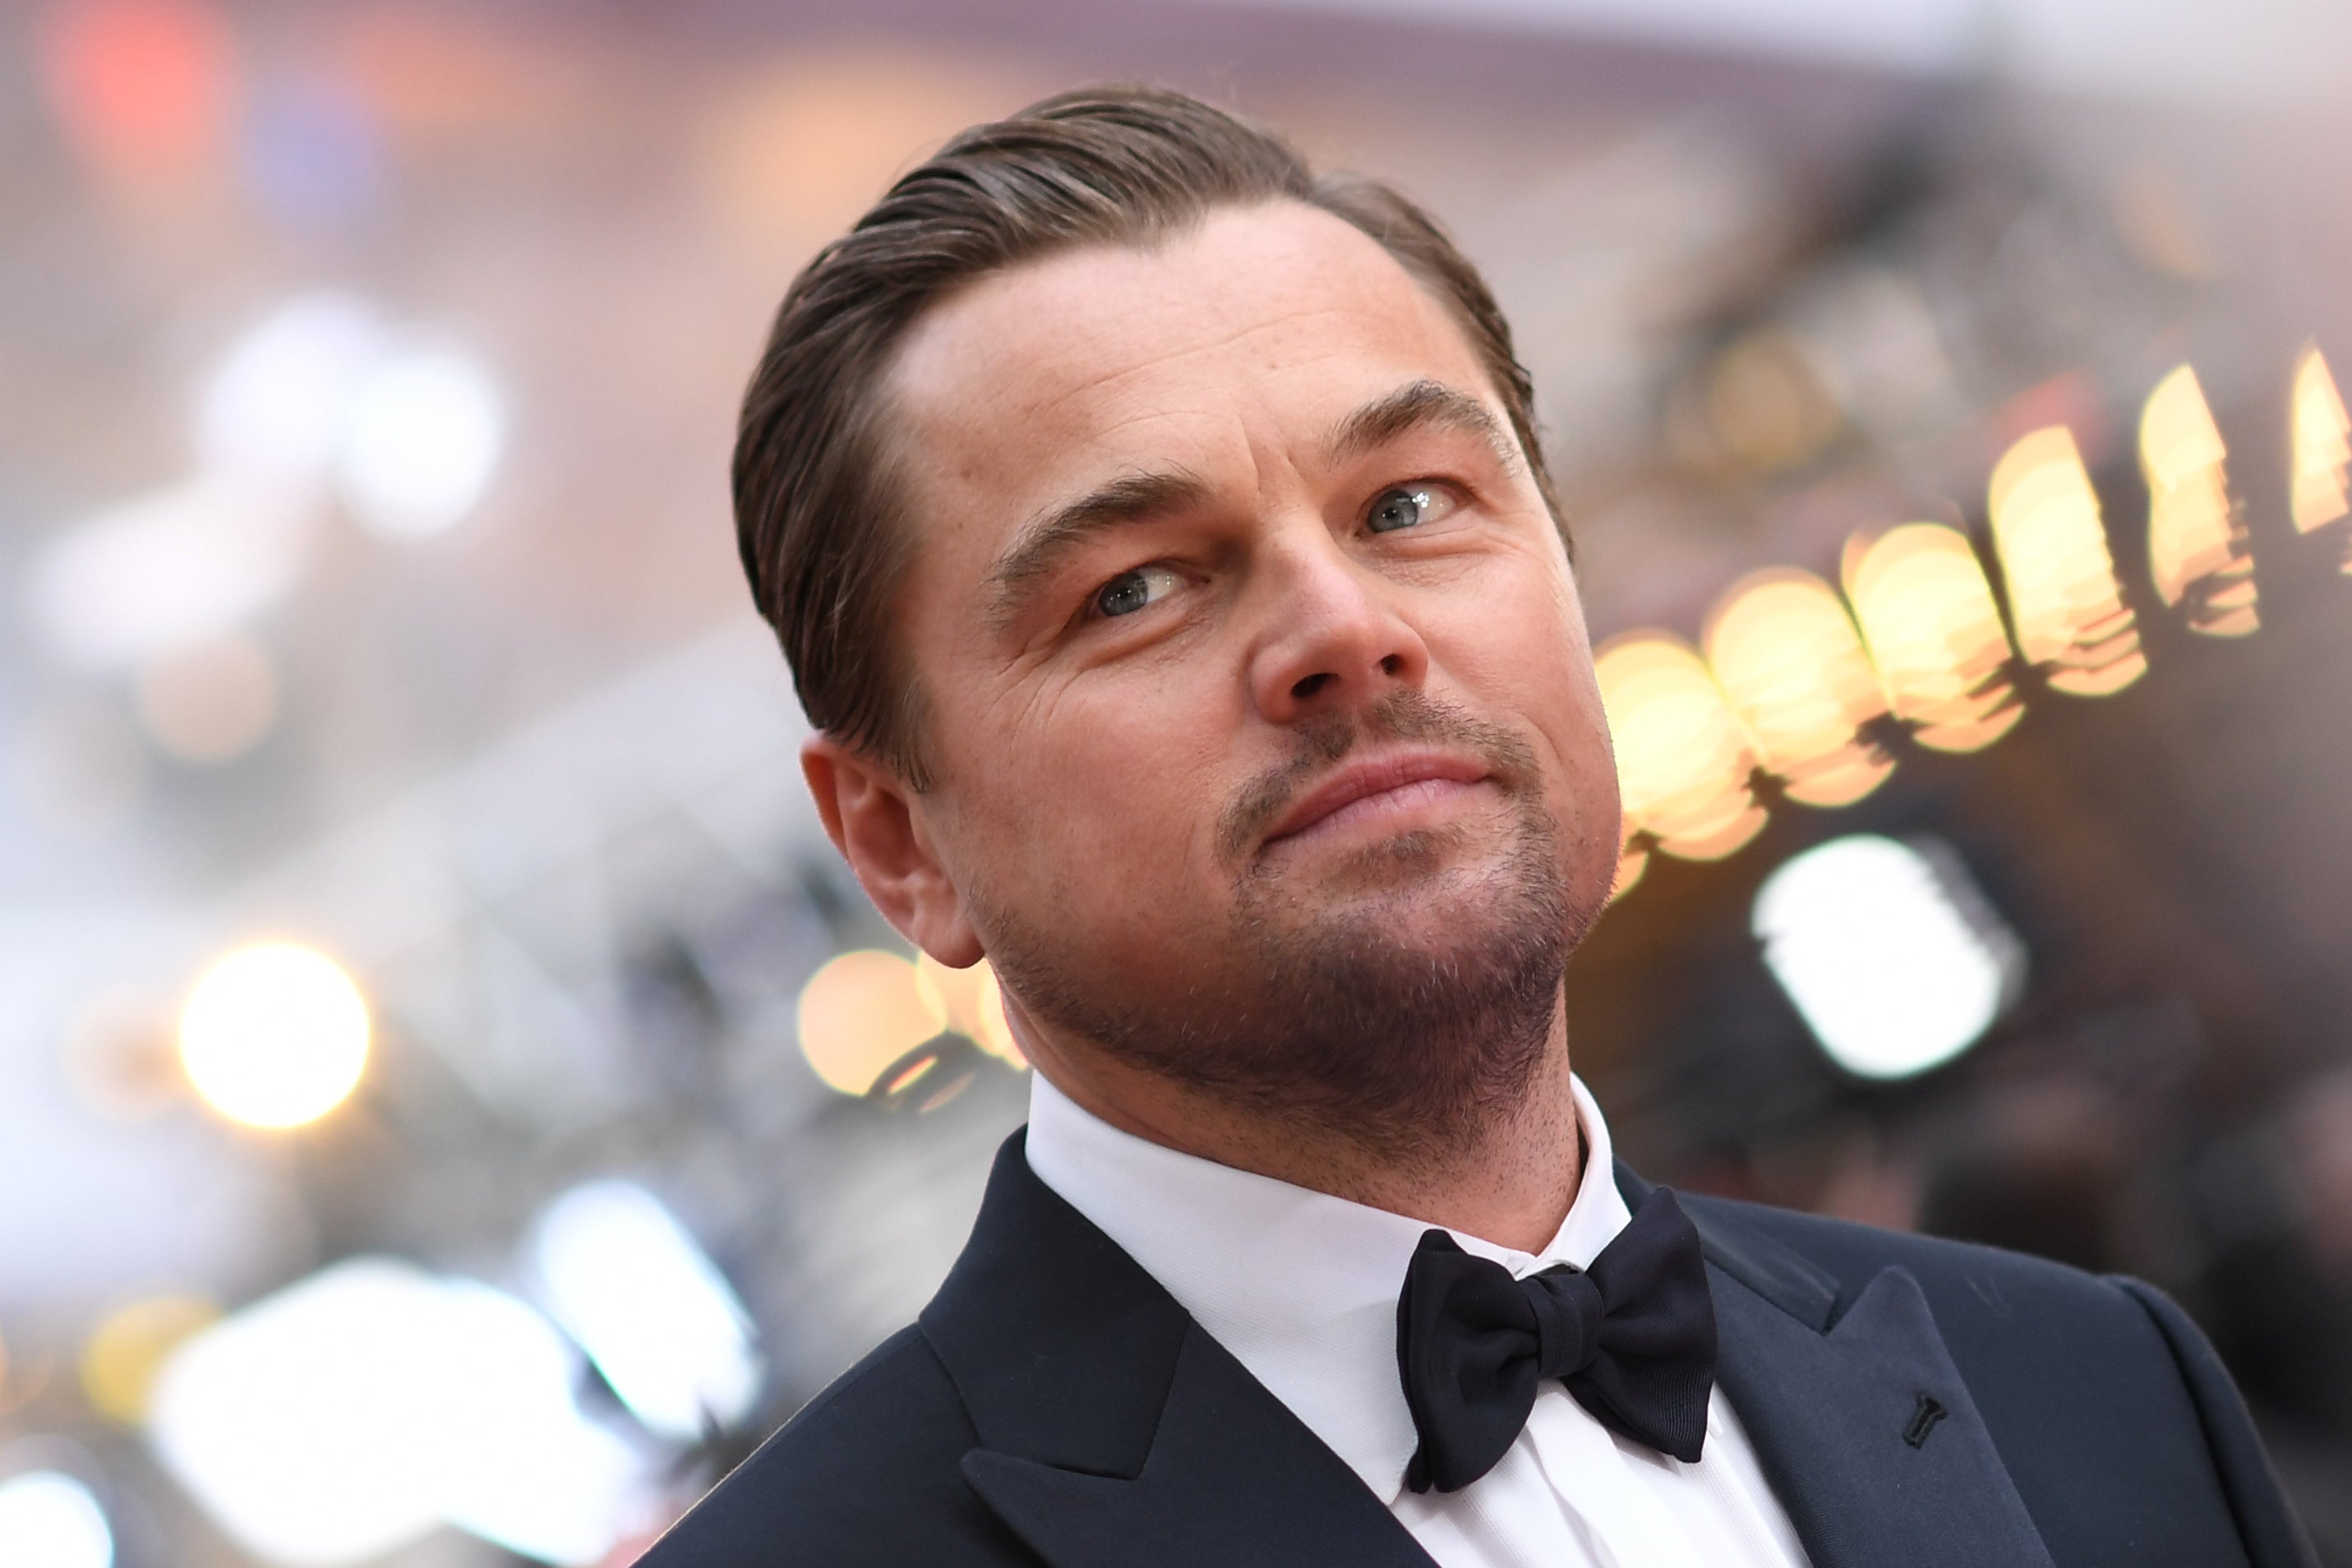 Leonardo DiCaprio attends the Oscars in 2020